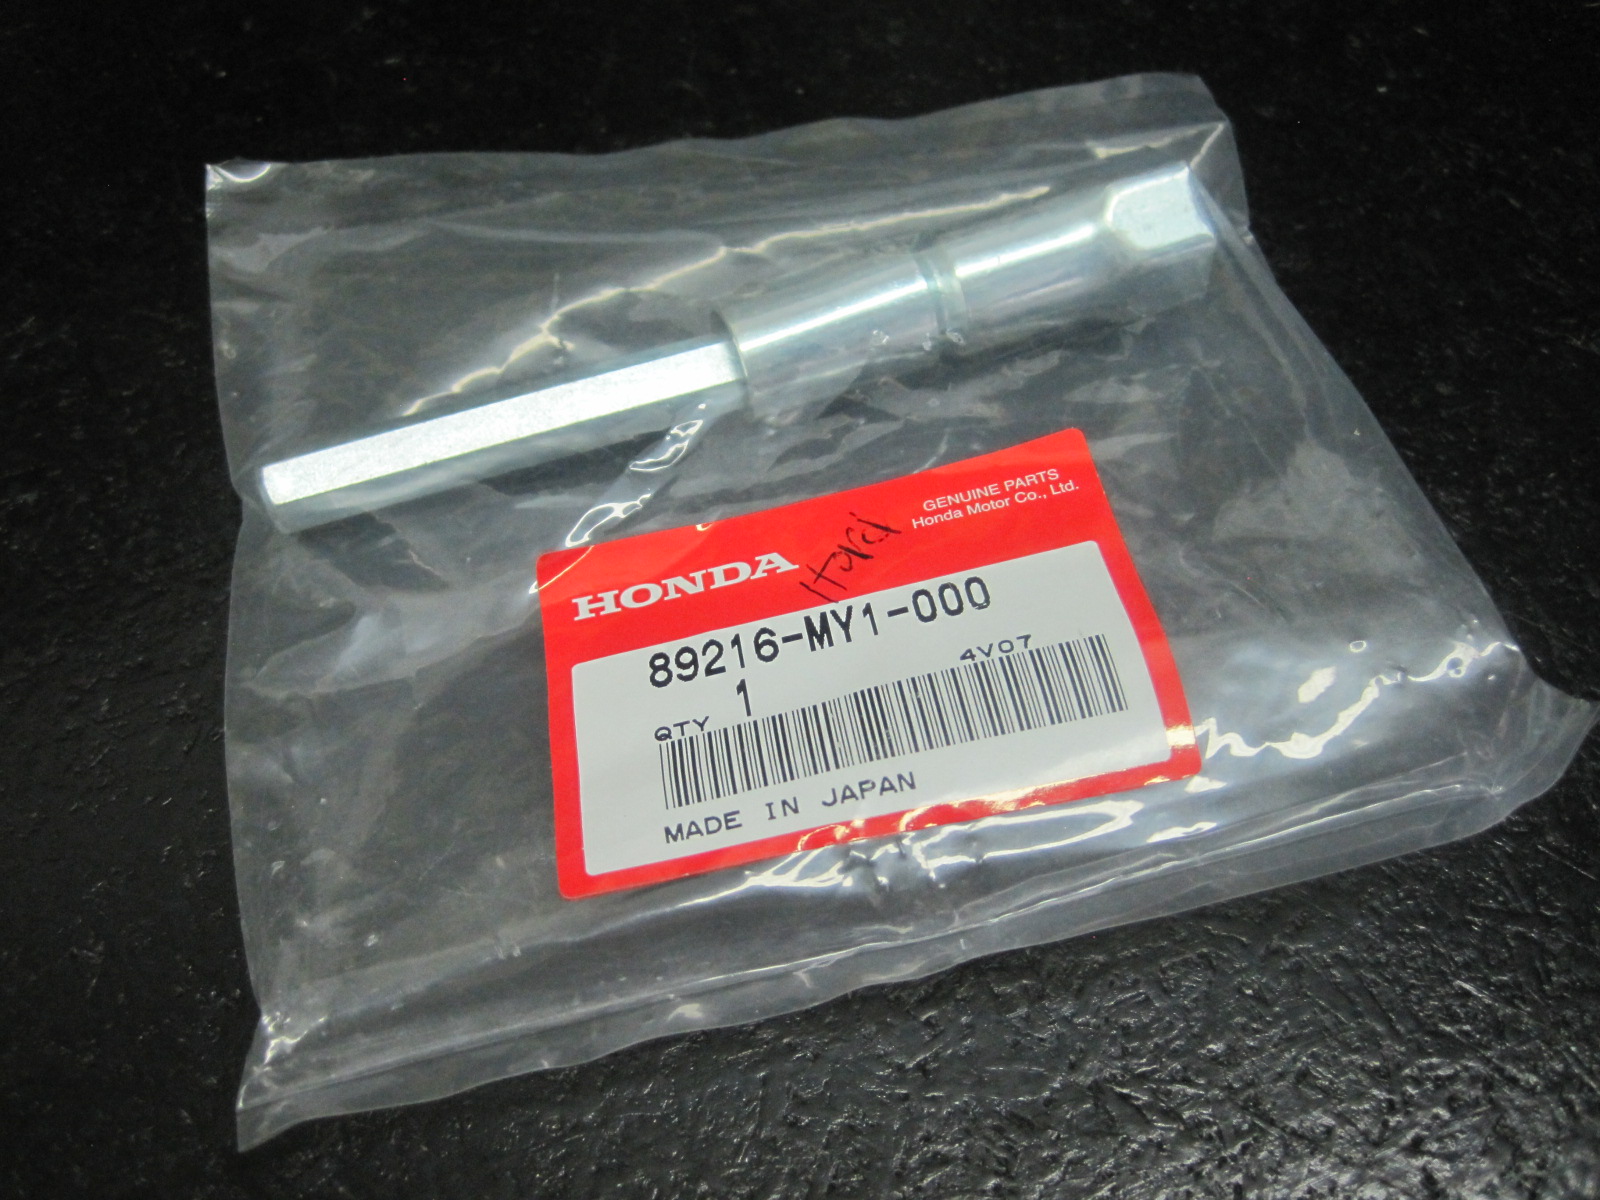 89216-MY1-000 Spark plug socket wrench